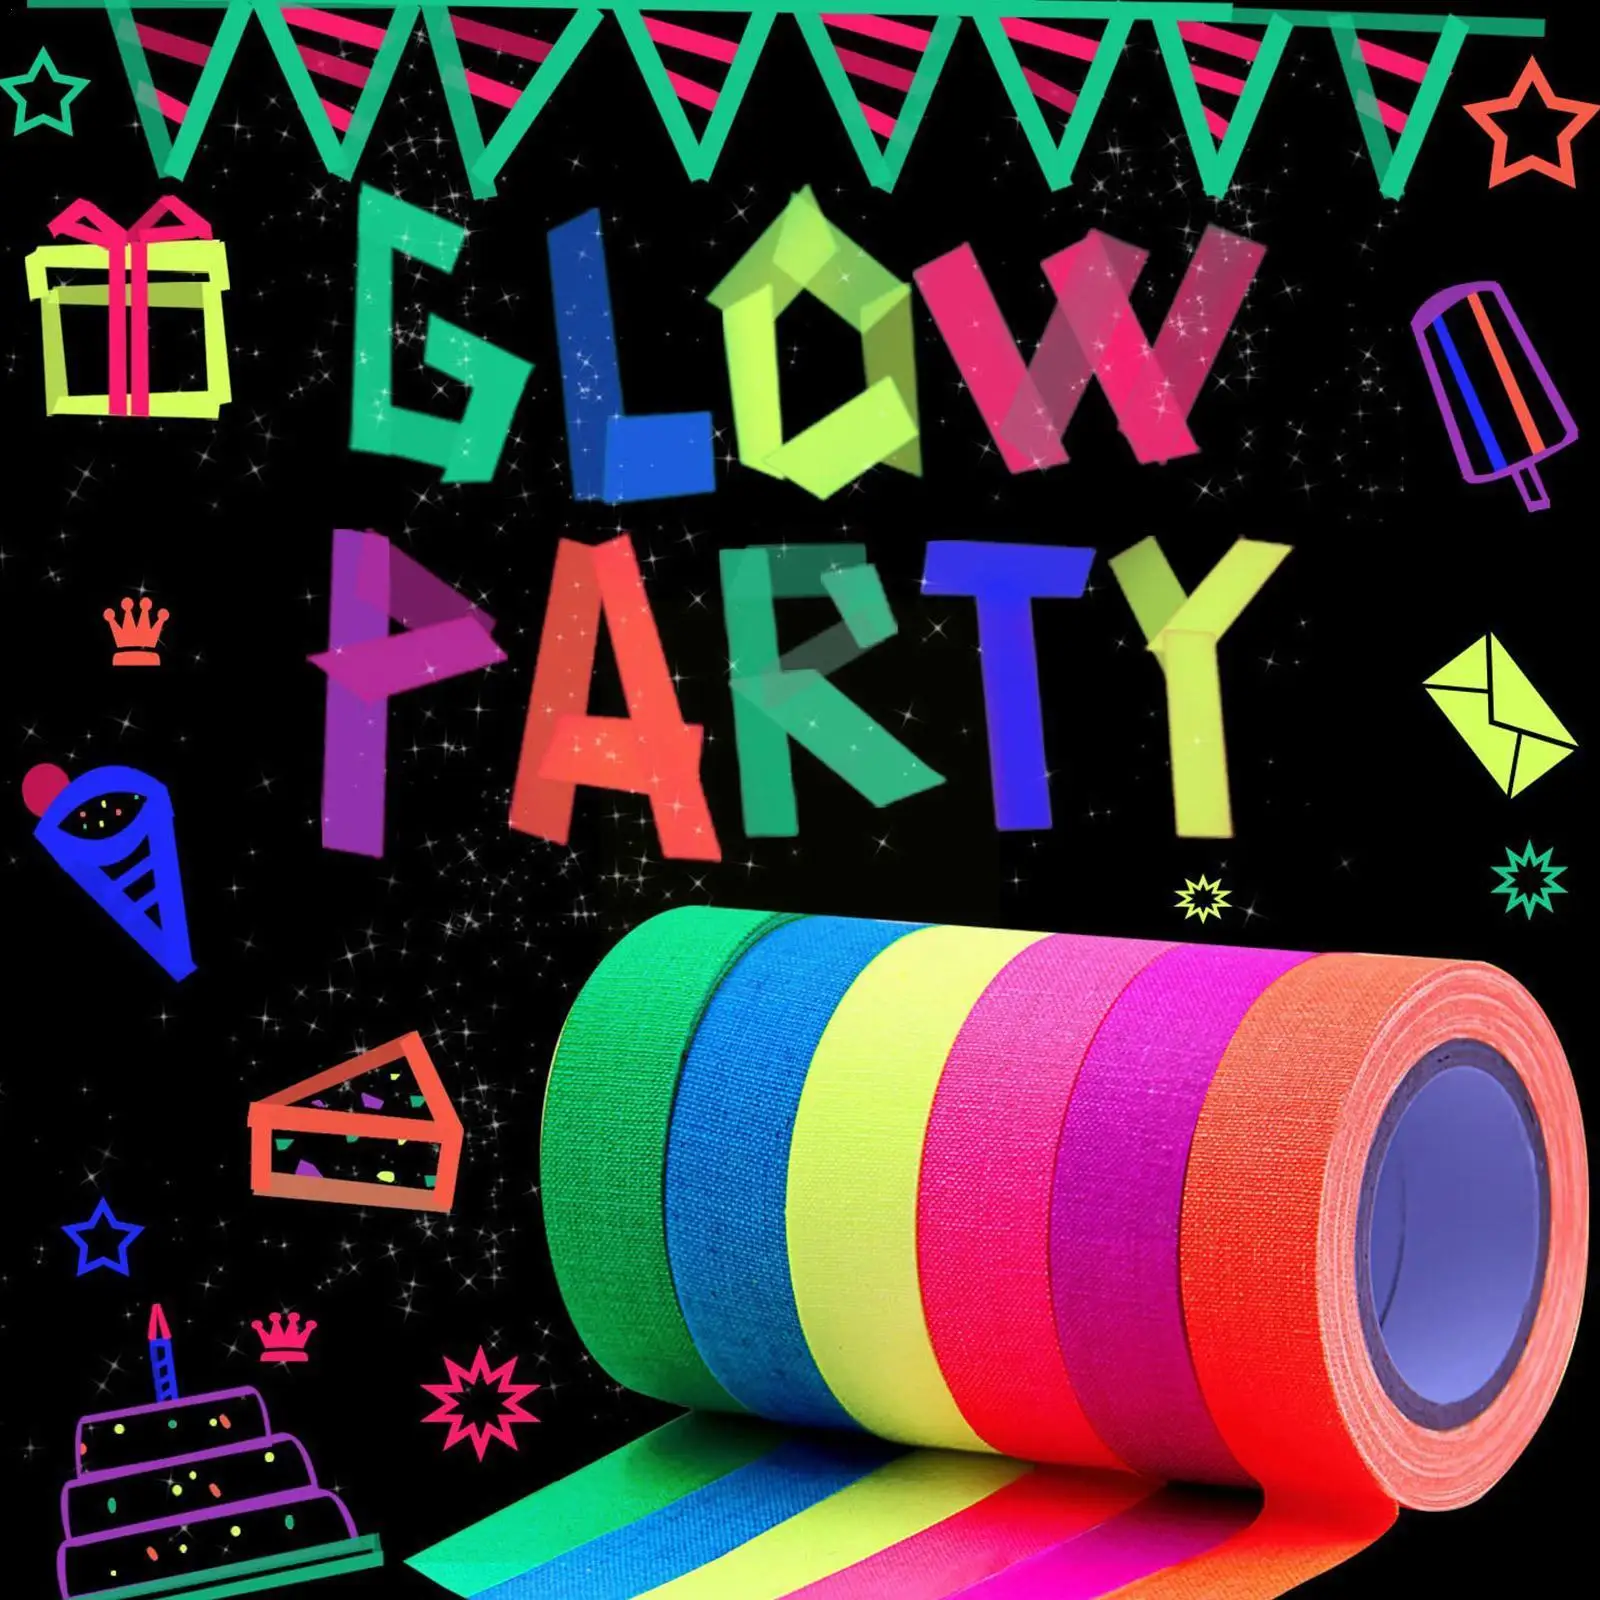 

Diy Fluorescent Uv Cotton Tape Matt Night Self-adhesive Glow In The Dark Luminous Tape For Party Floors Drop Shipping Q4u6